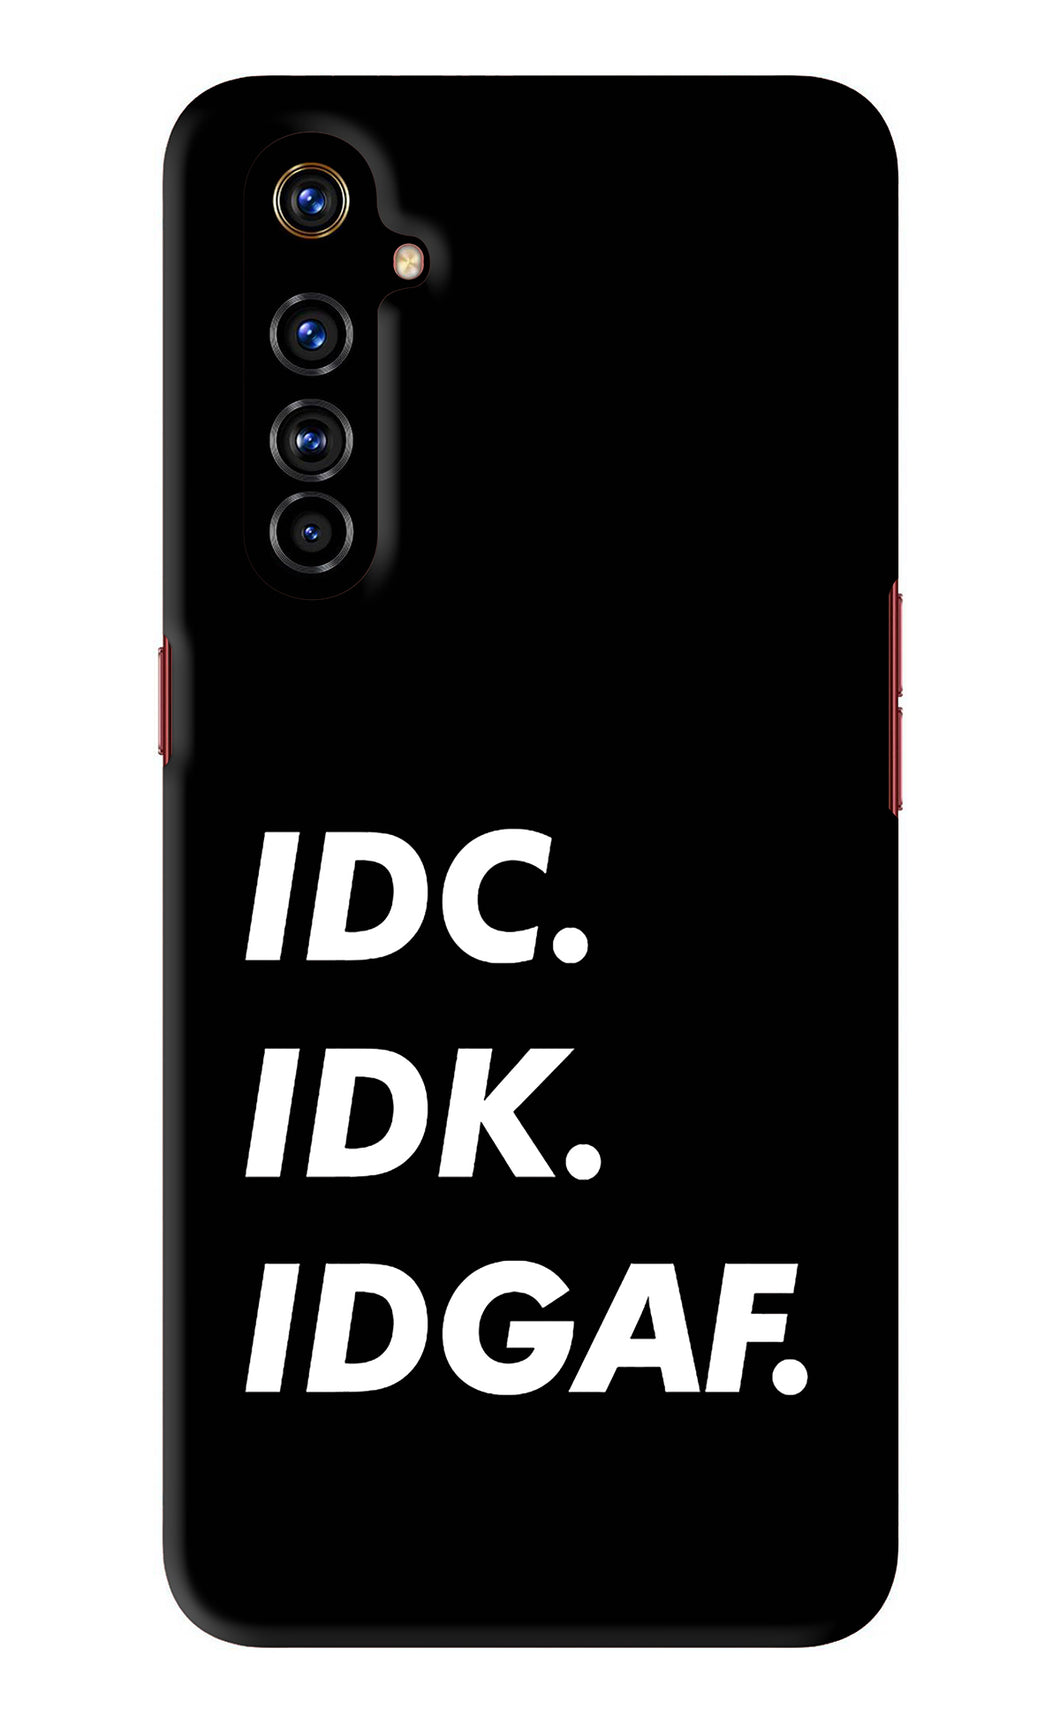 Idc Idk Idgaf Realme X50 Pro Back Skin Wrap